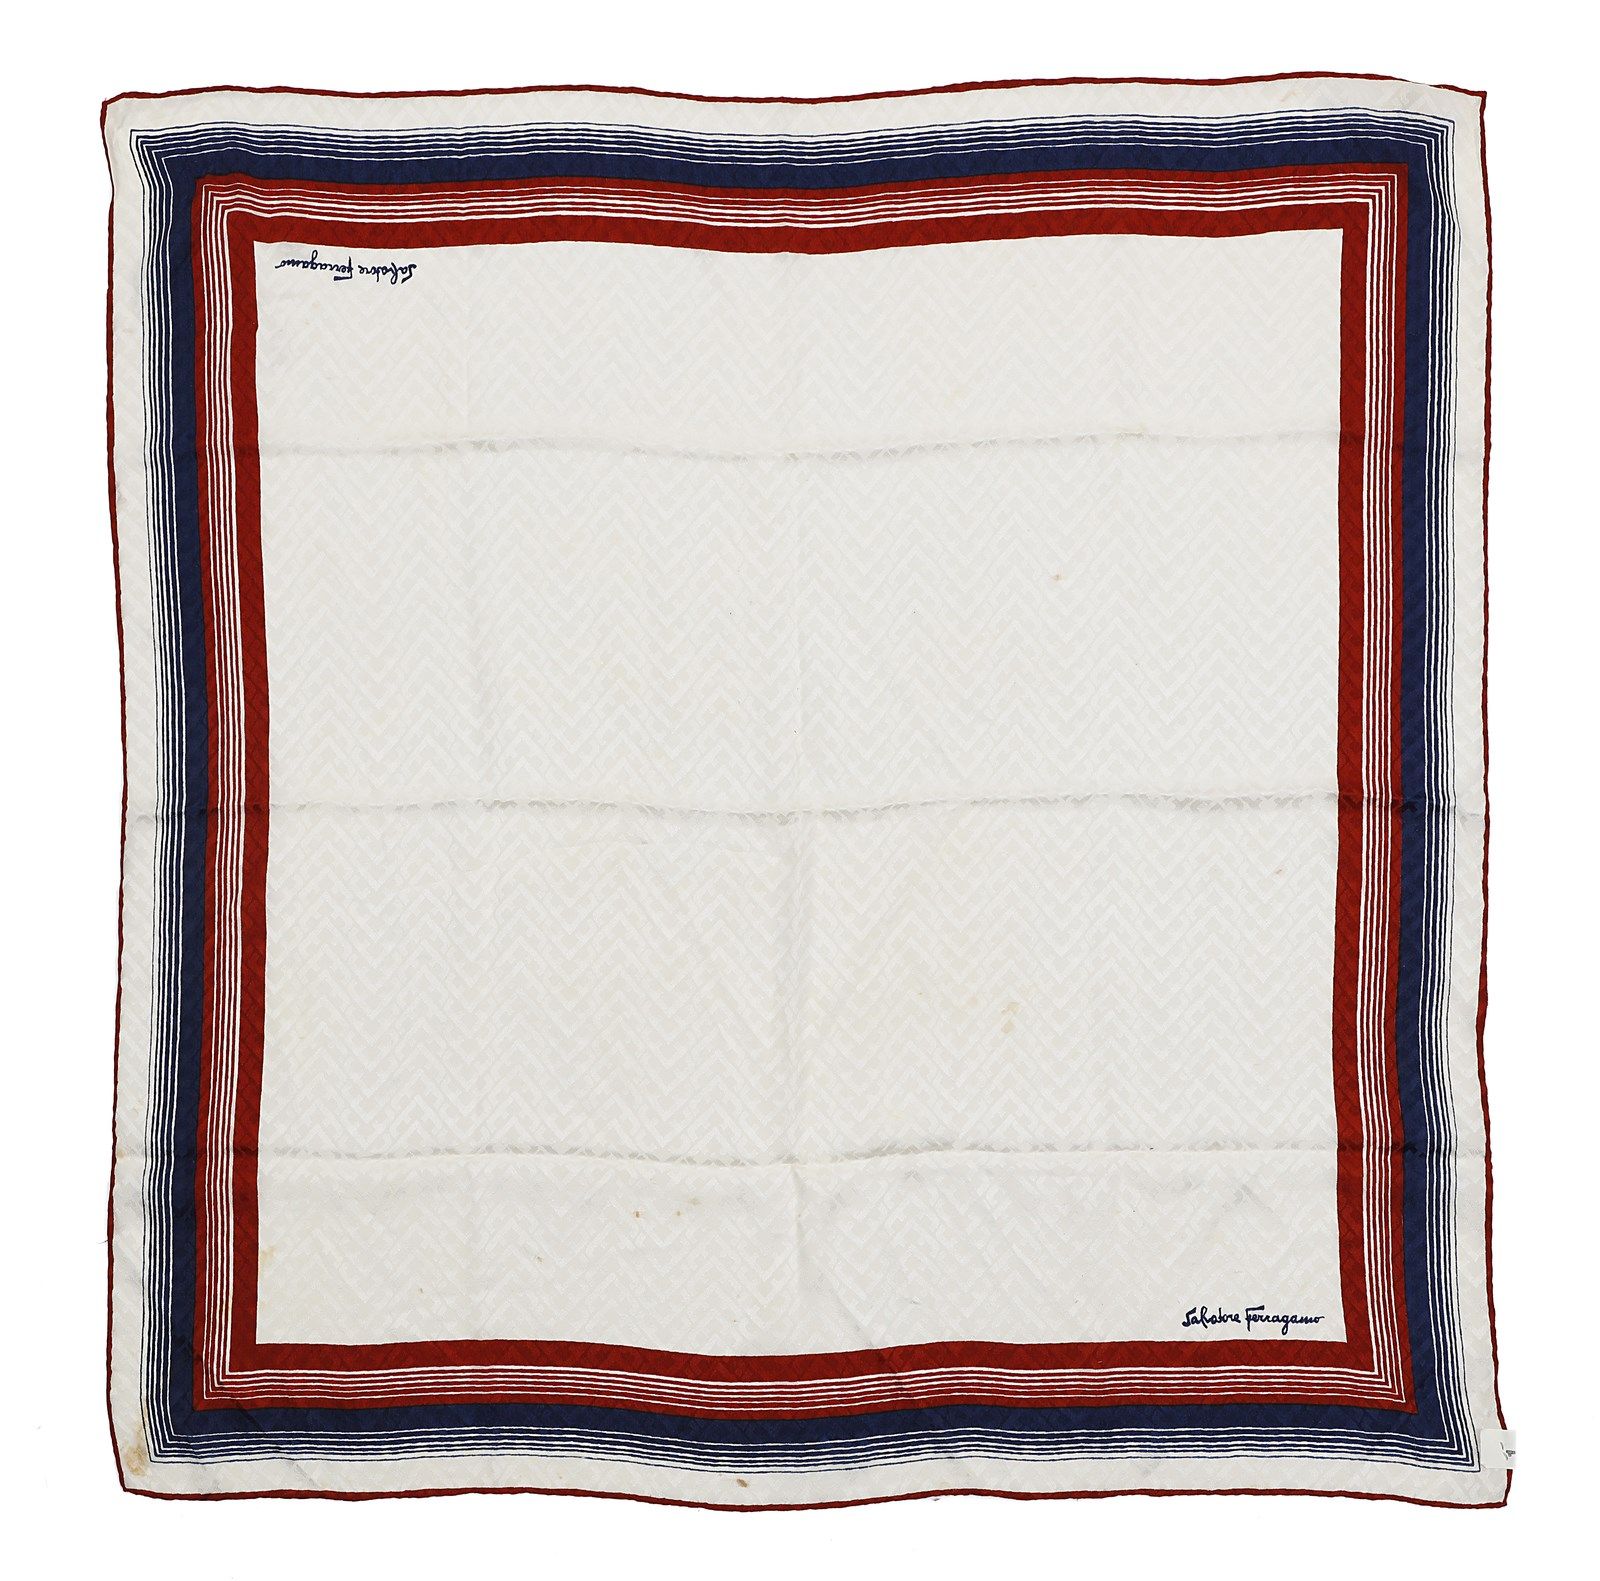 SALVATORE FERRAGAMO Multicolored foulard (cream, blue and red) in silk. Mehrfarb&hellip;